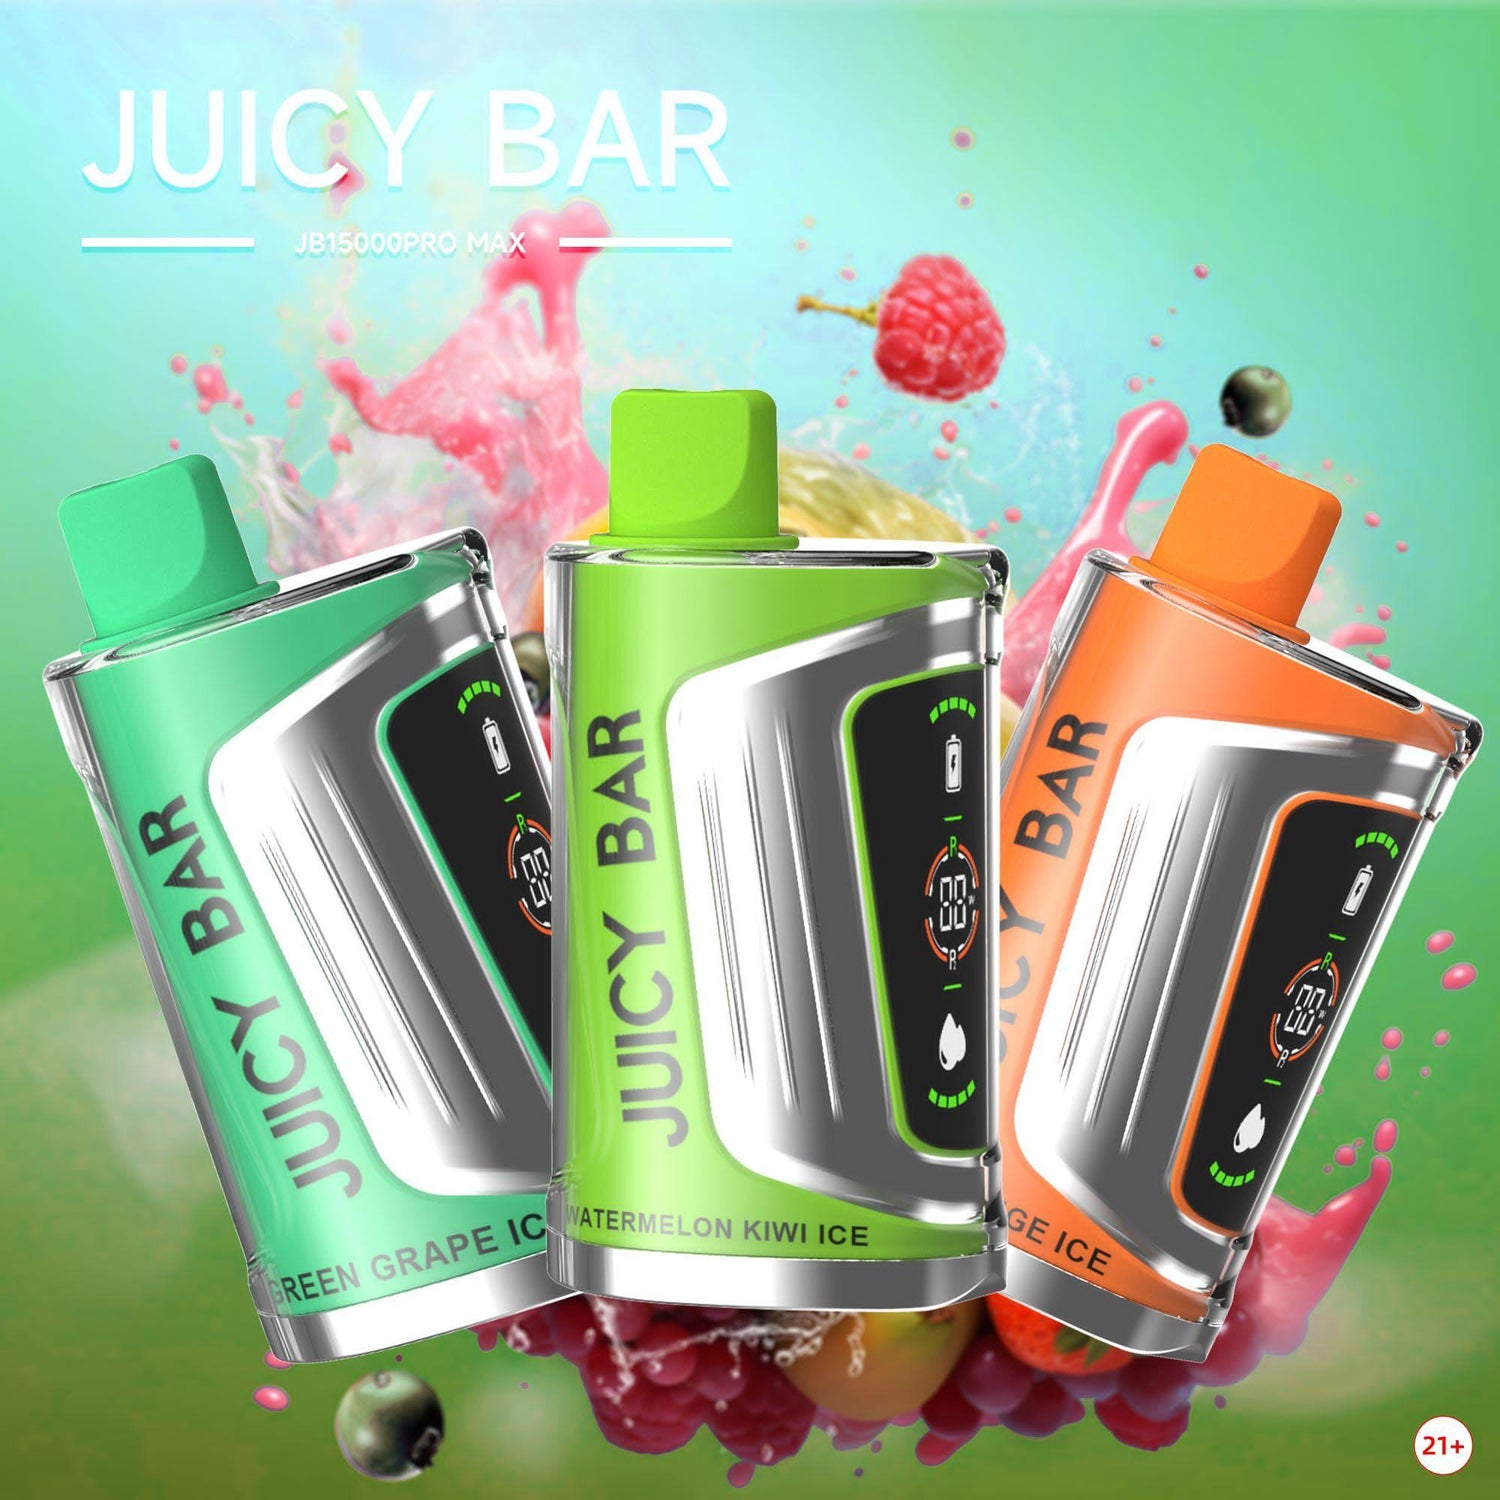 Juicy-Bar-JB15000-Pro-Max-Graphic